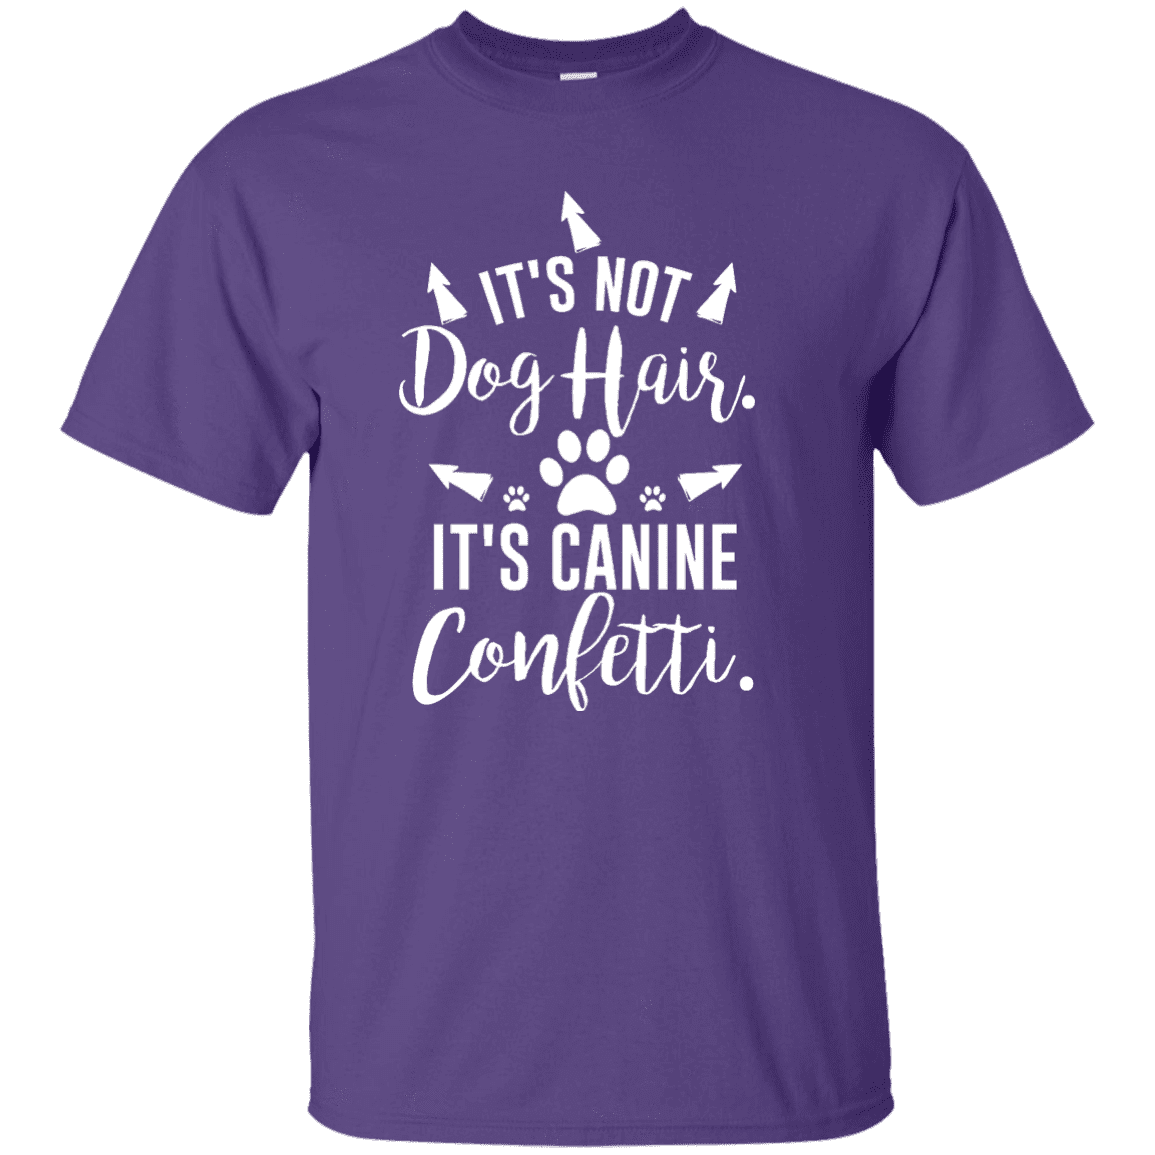 Canine Confetti - T Shirt.